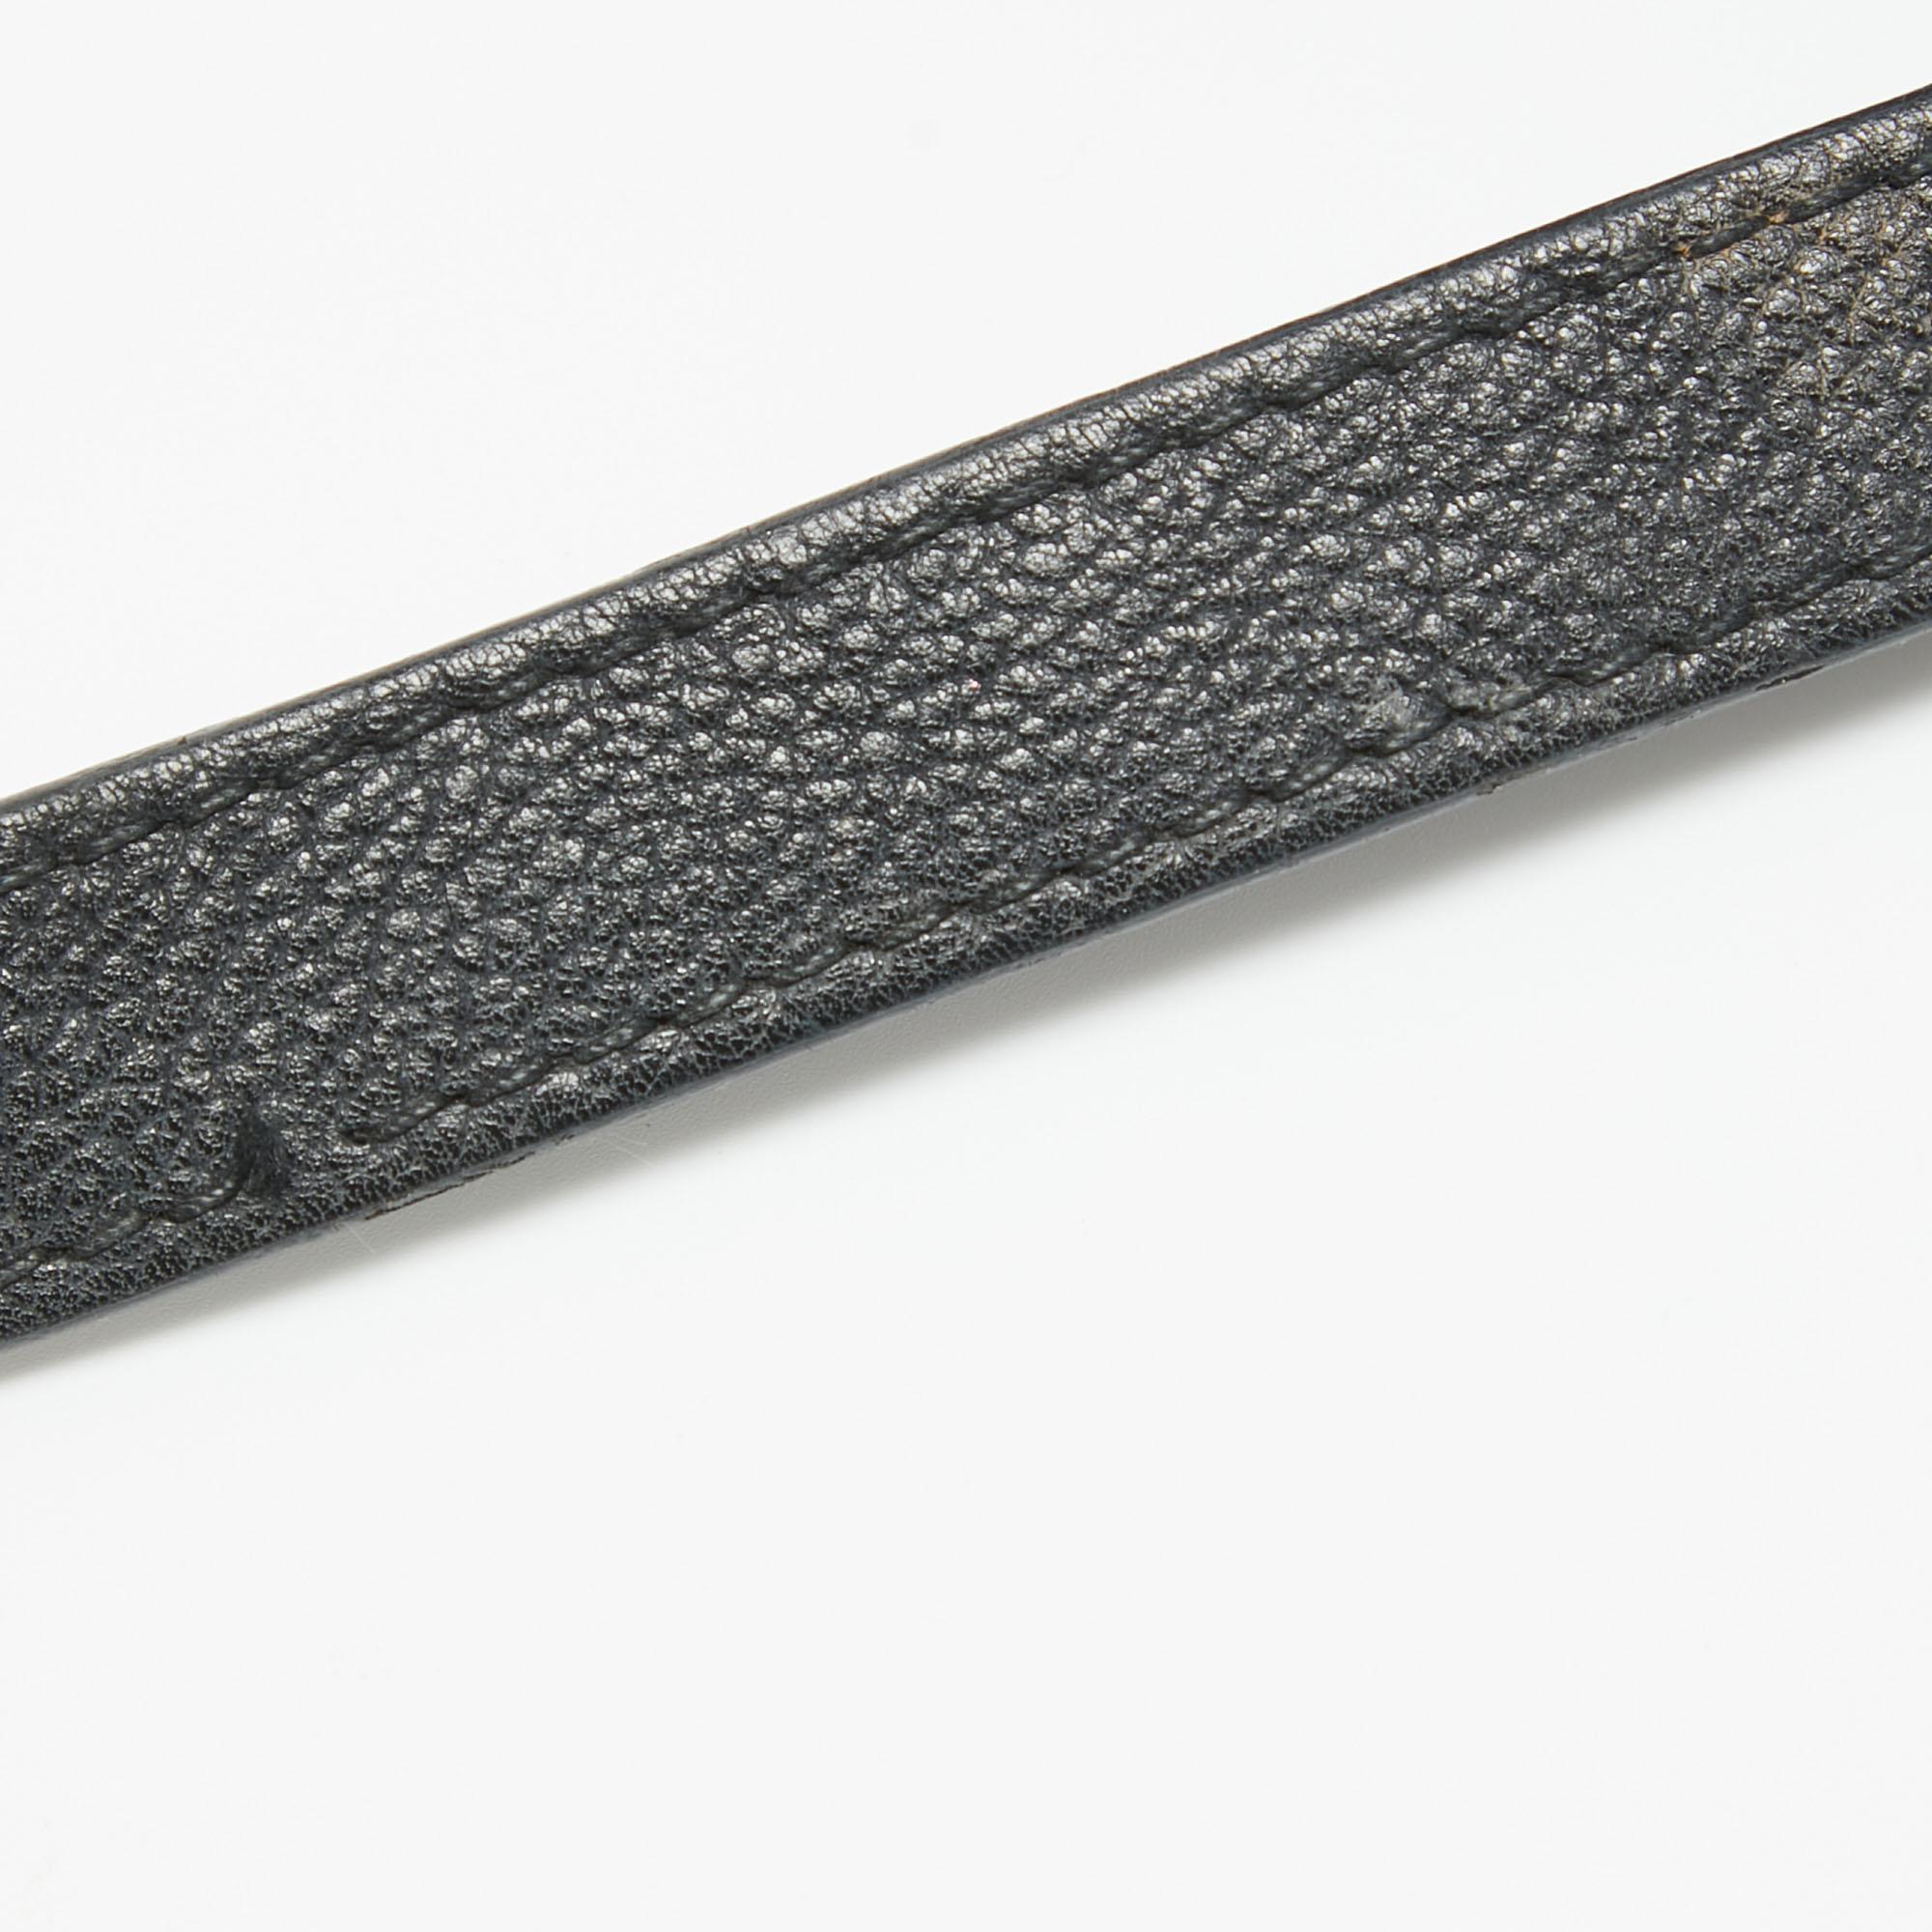 Louis Vuitton Black Leather Lockme II Bag For Sale 1